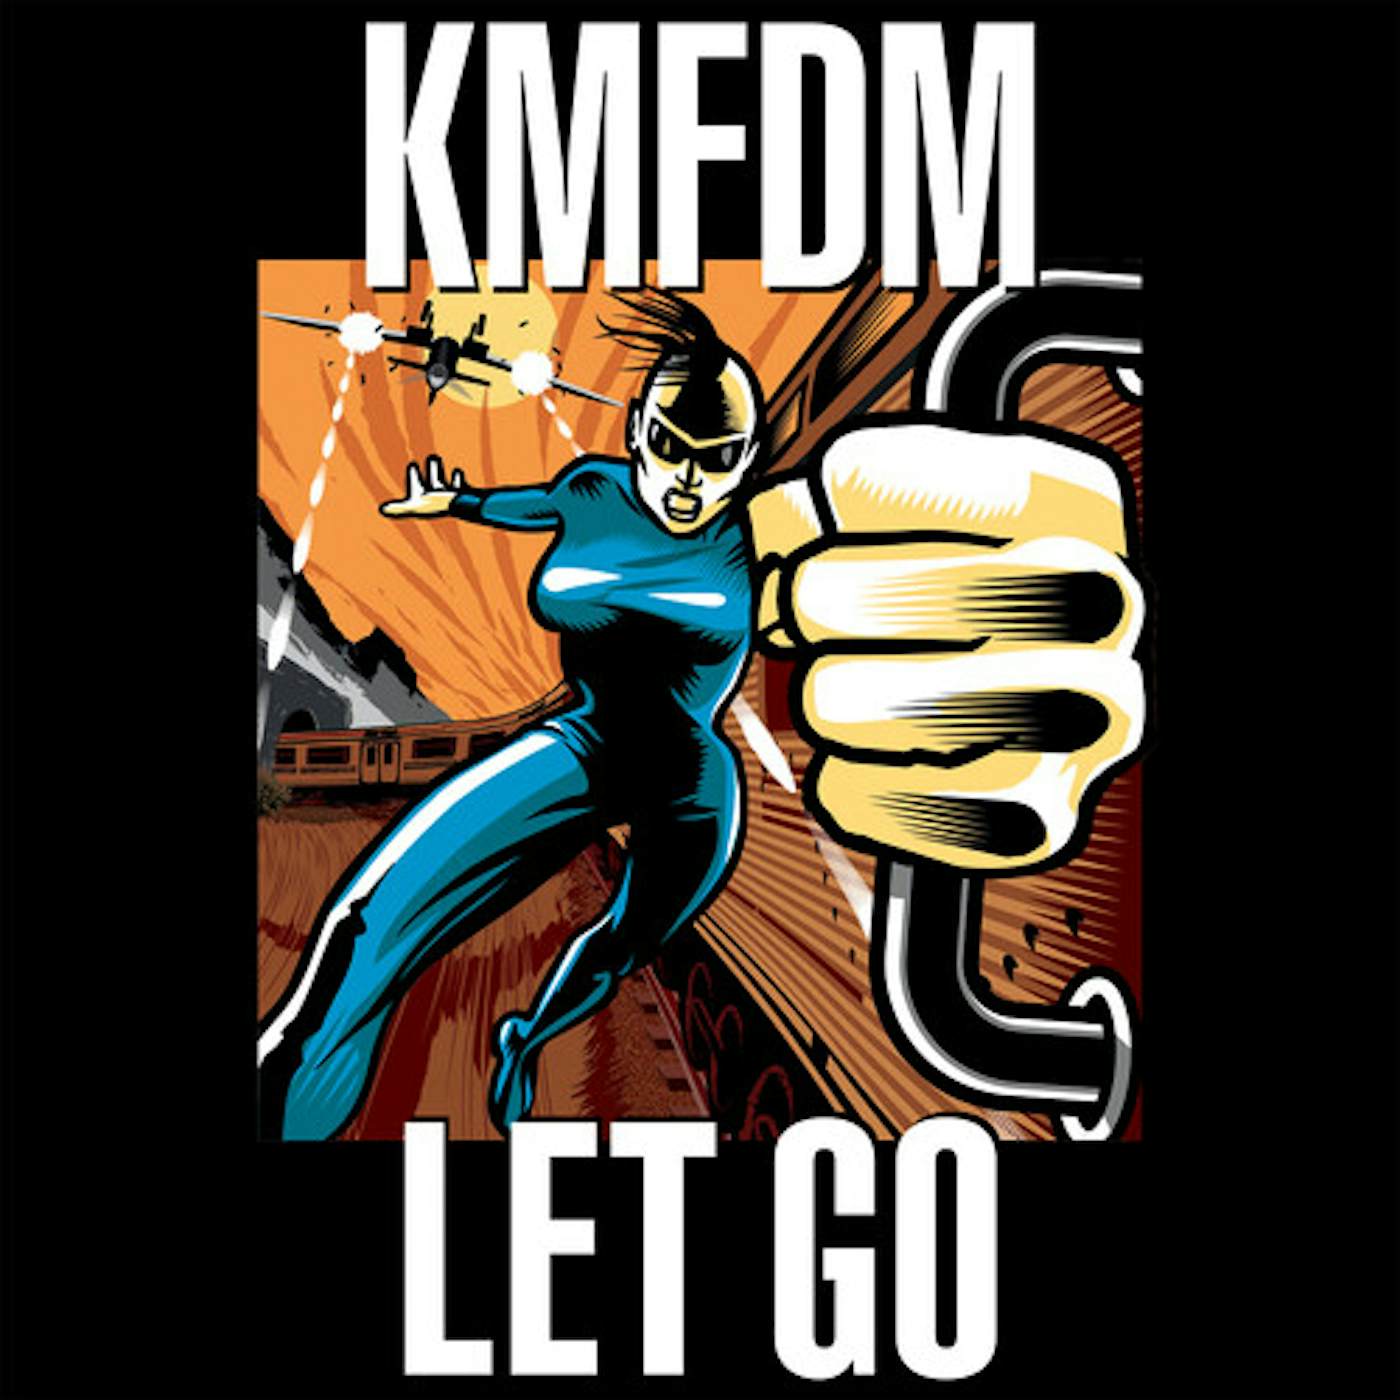 KMFDM LET GO CD